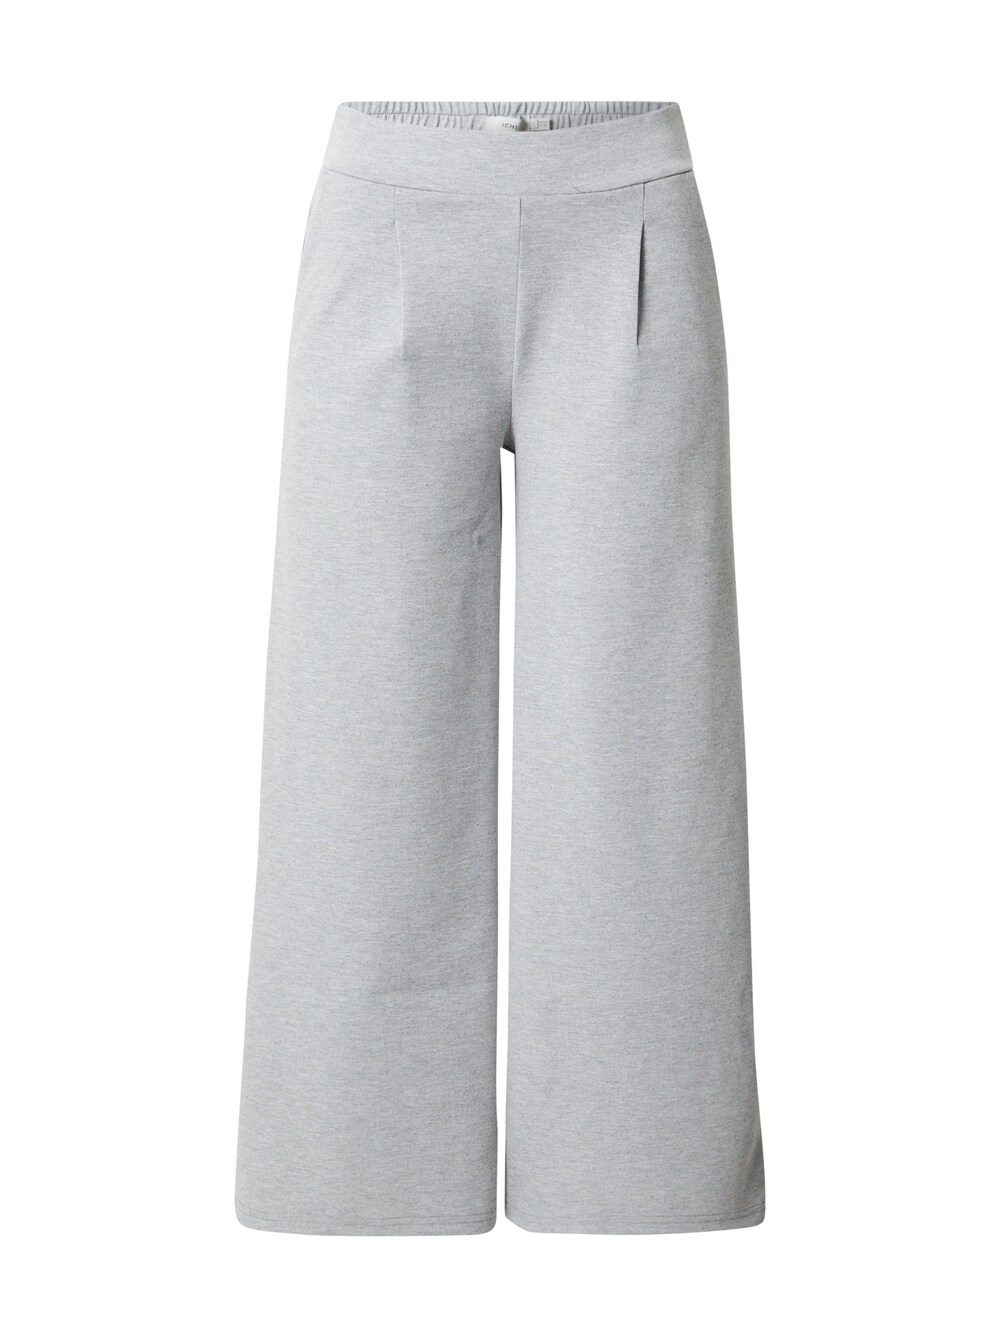 Широкие брюки-чиносы Ichi Kate, пестрый серый